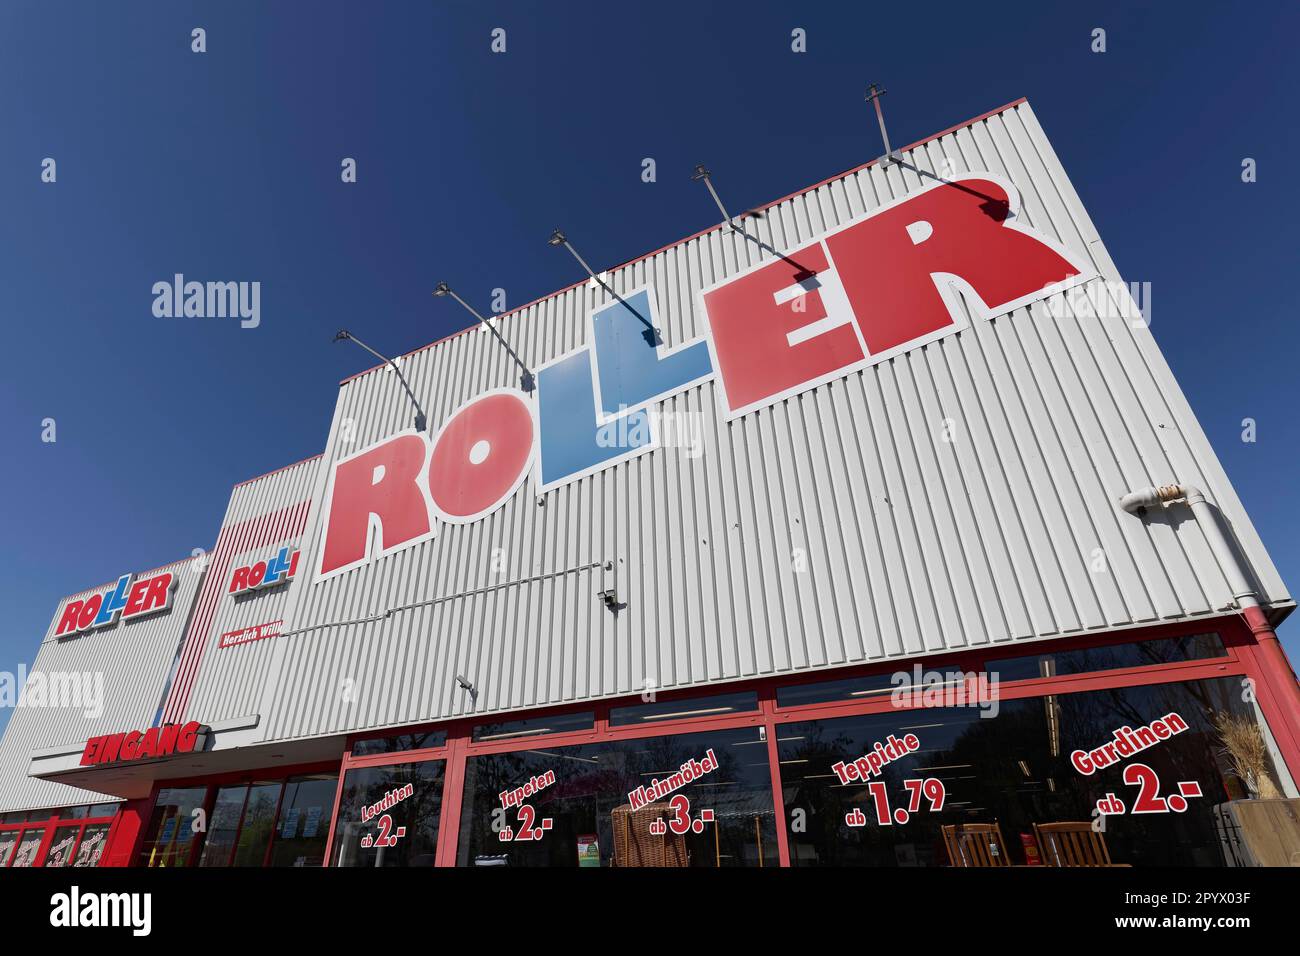 Roller Moebel, logo sur le bâtiment, meuble discounter, Ratingen,  Rhénanie-du-Nord-Westphalie, Allemagne Photo Stock - Alamy